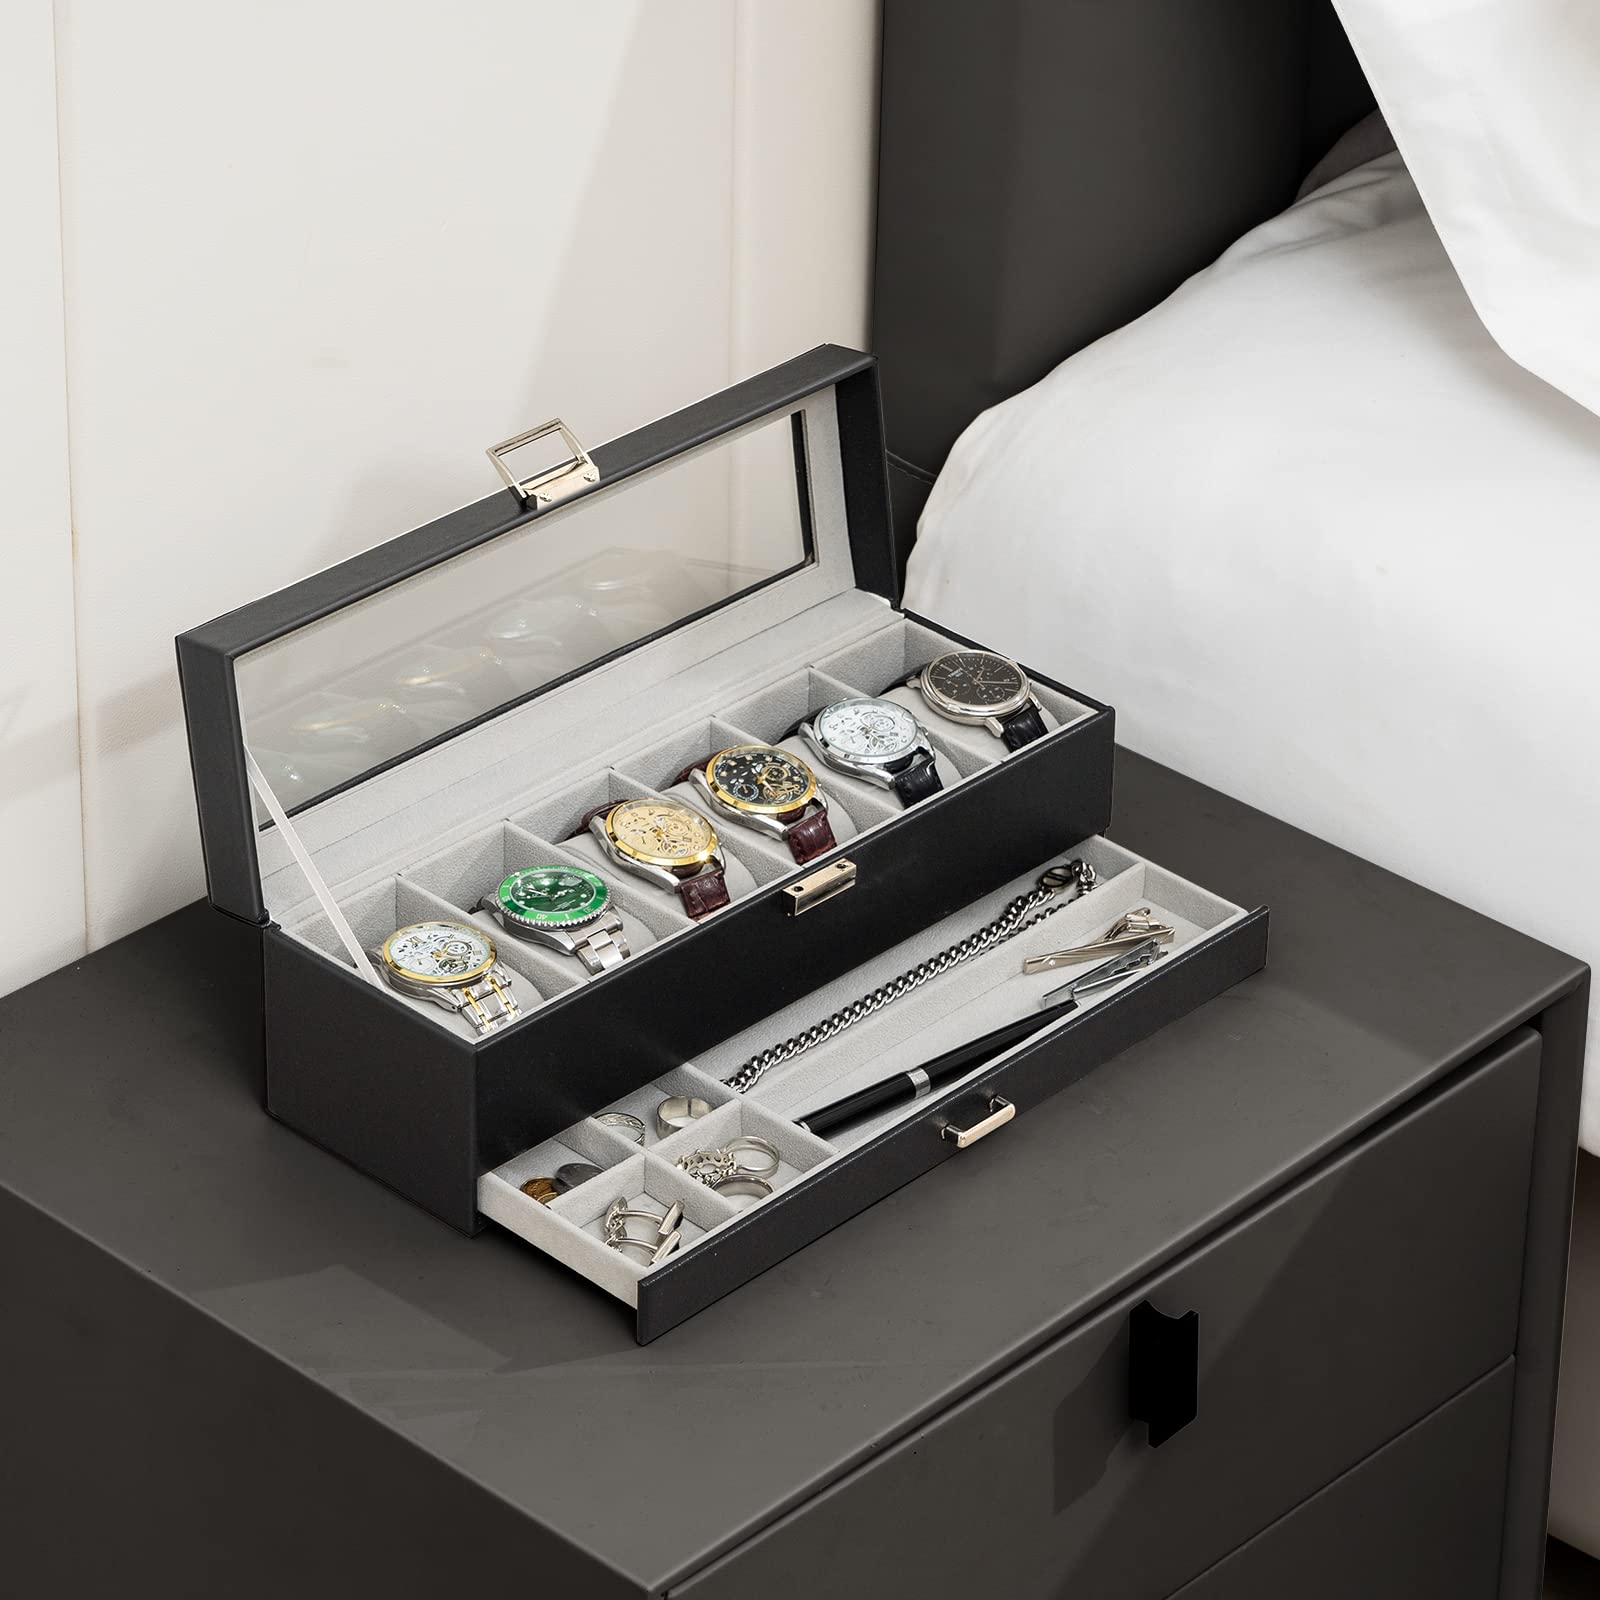 ProCase Travel Size Jewelry Box Bundle 6 Slots Watch Box with Drawer